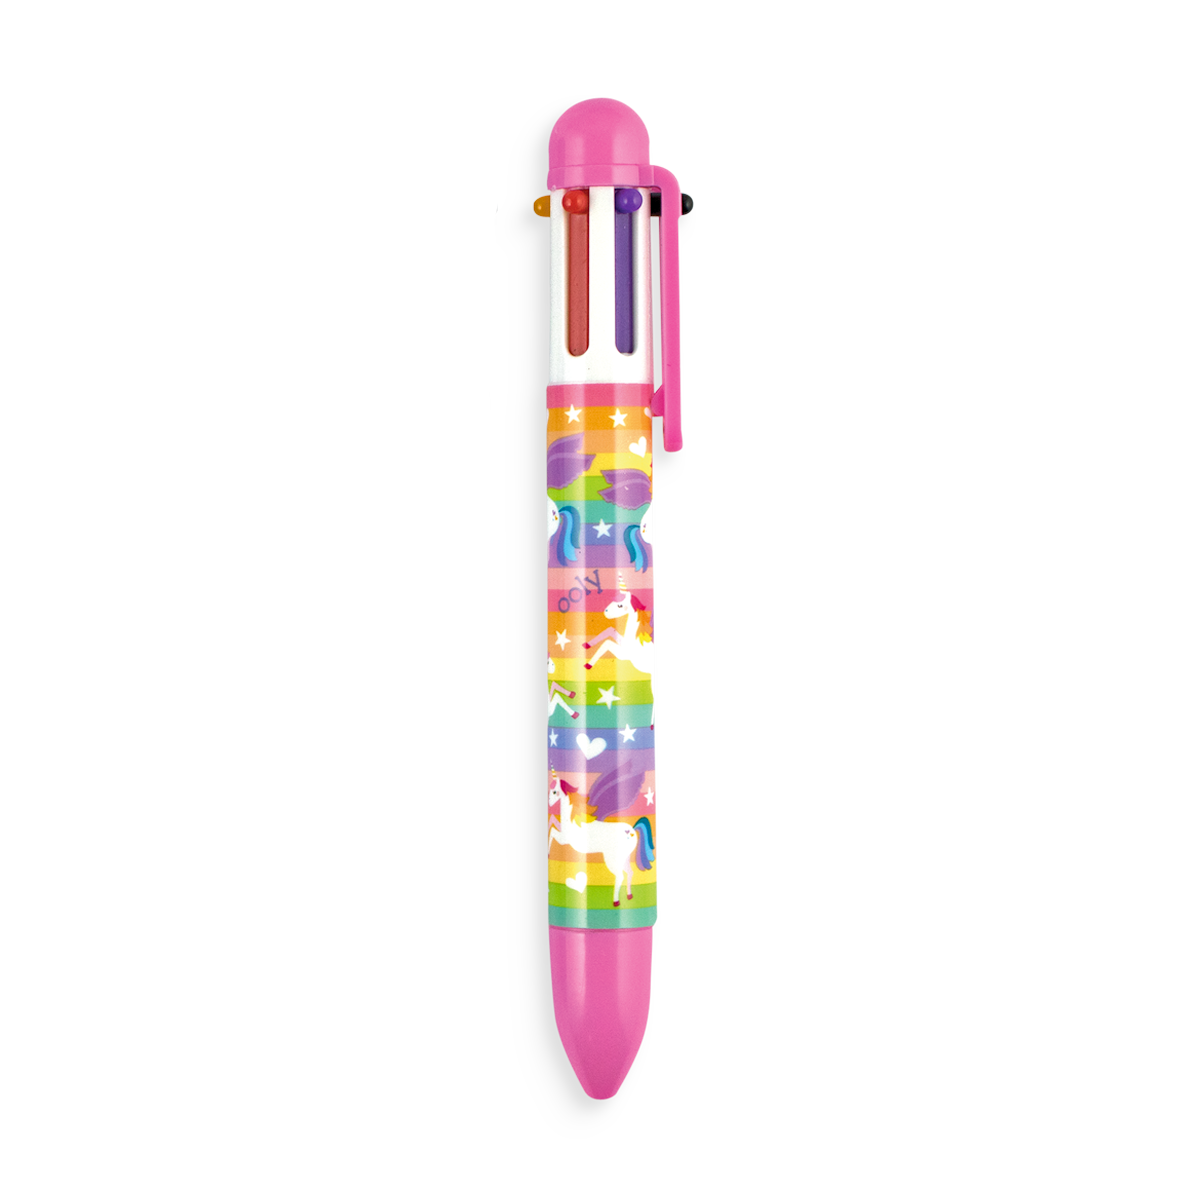 LED Light Up Unicorn Pens – Olly-Olly